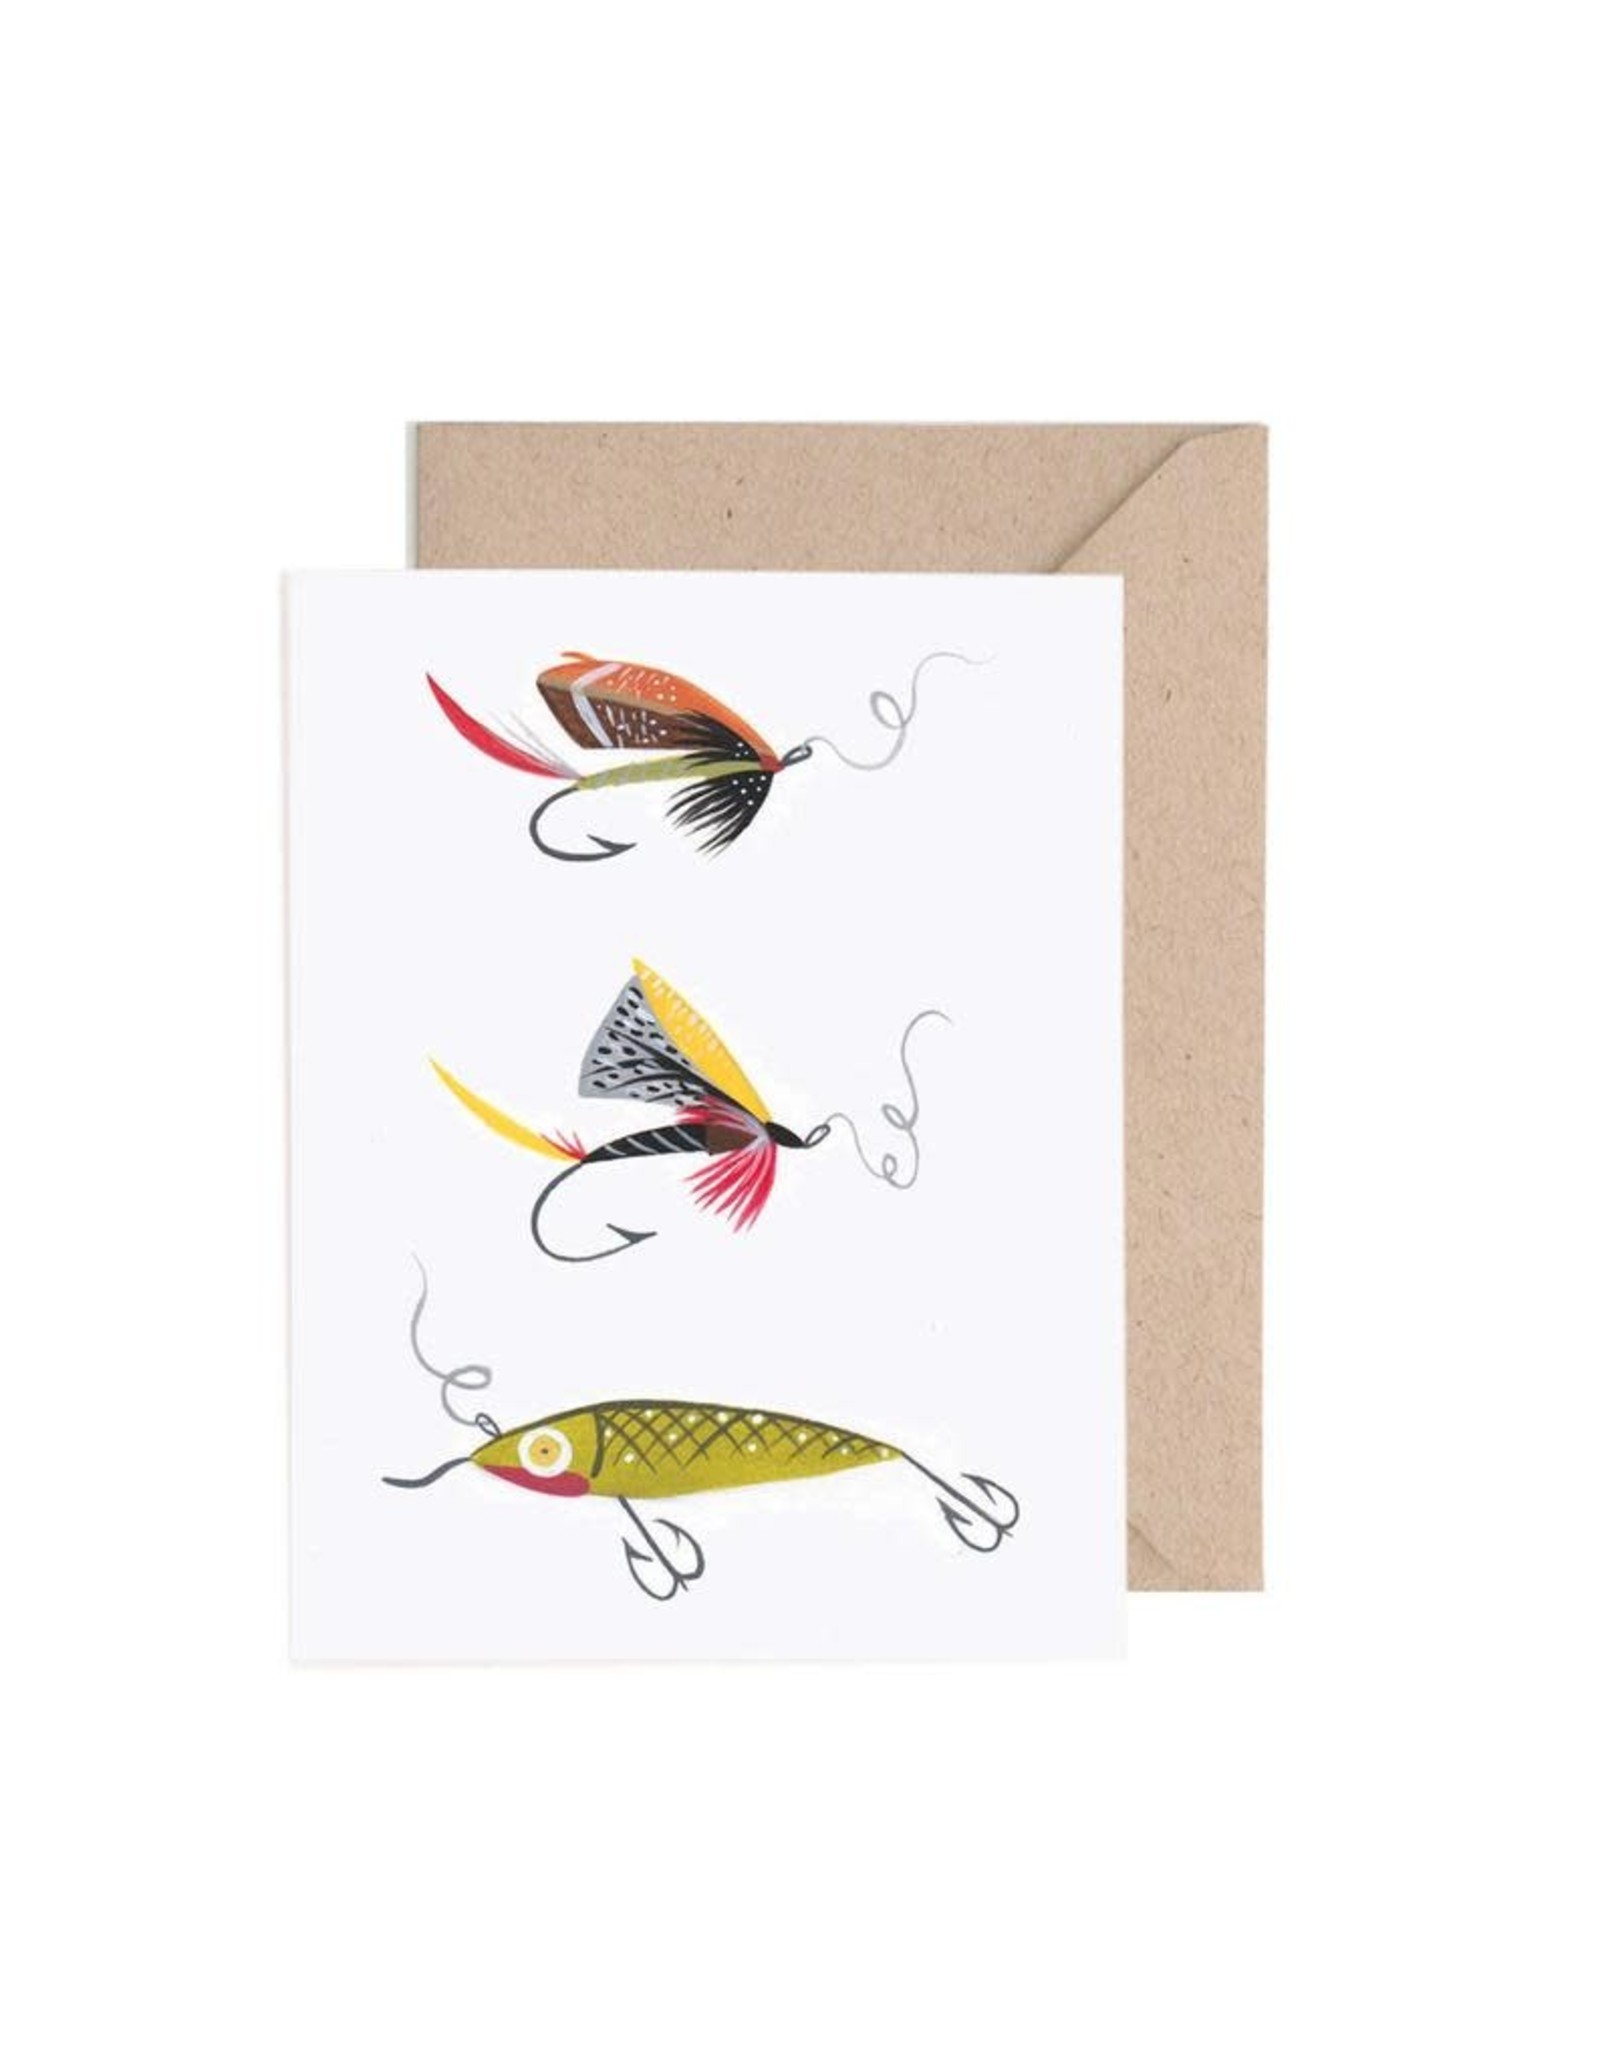 Lisa Vanin Notecard, Fishing Lures